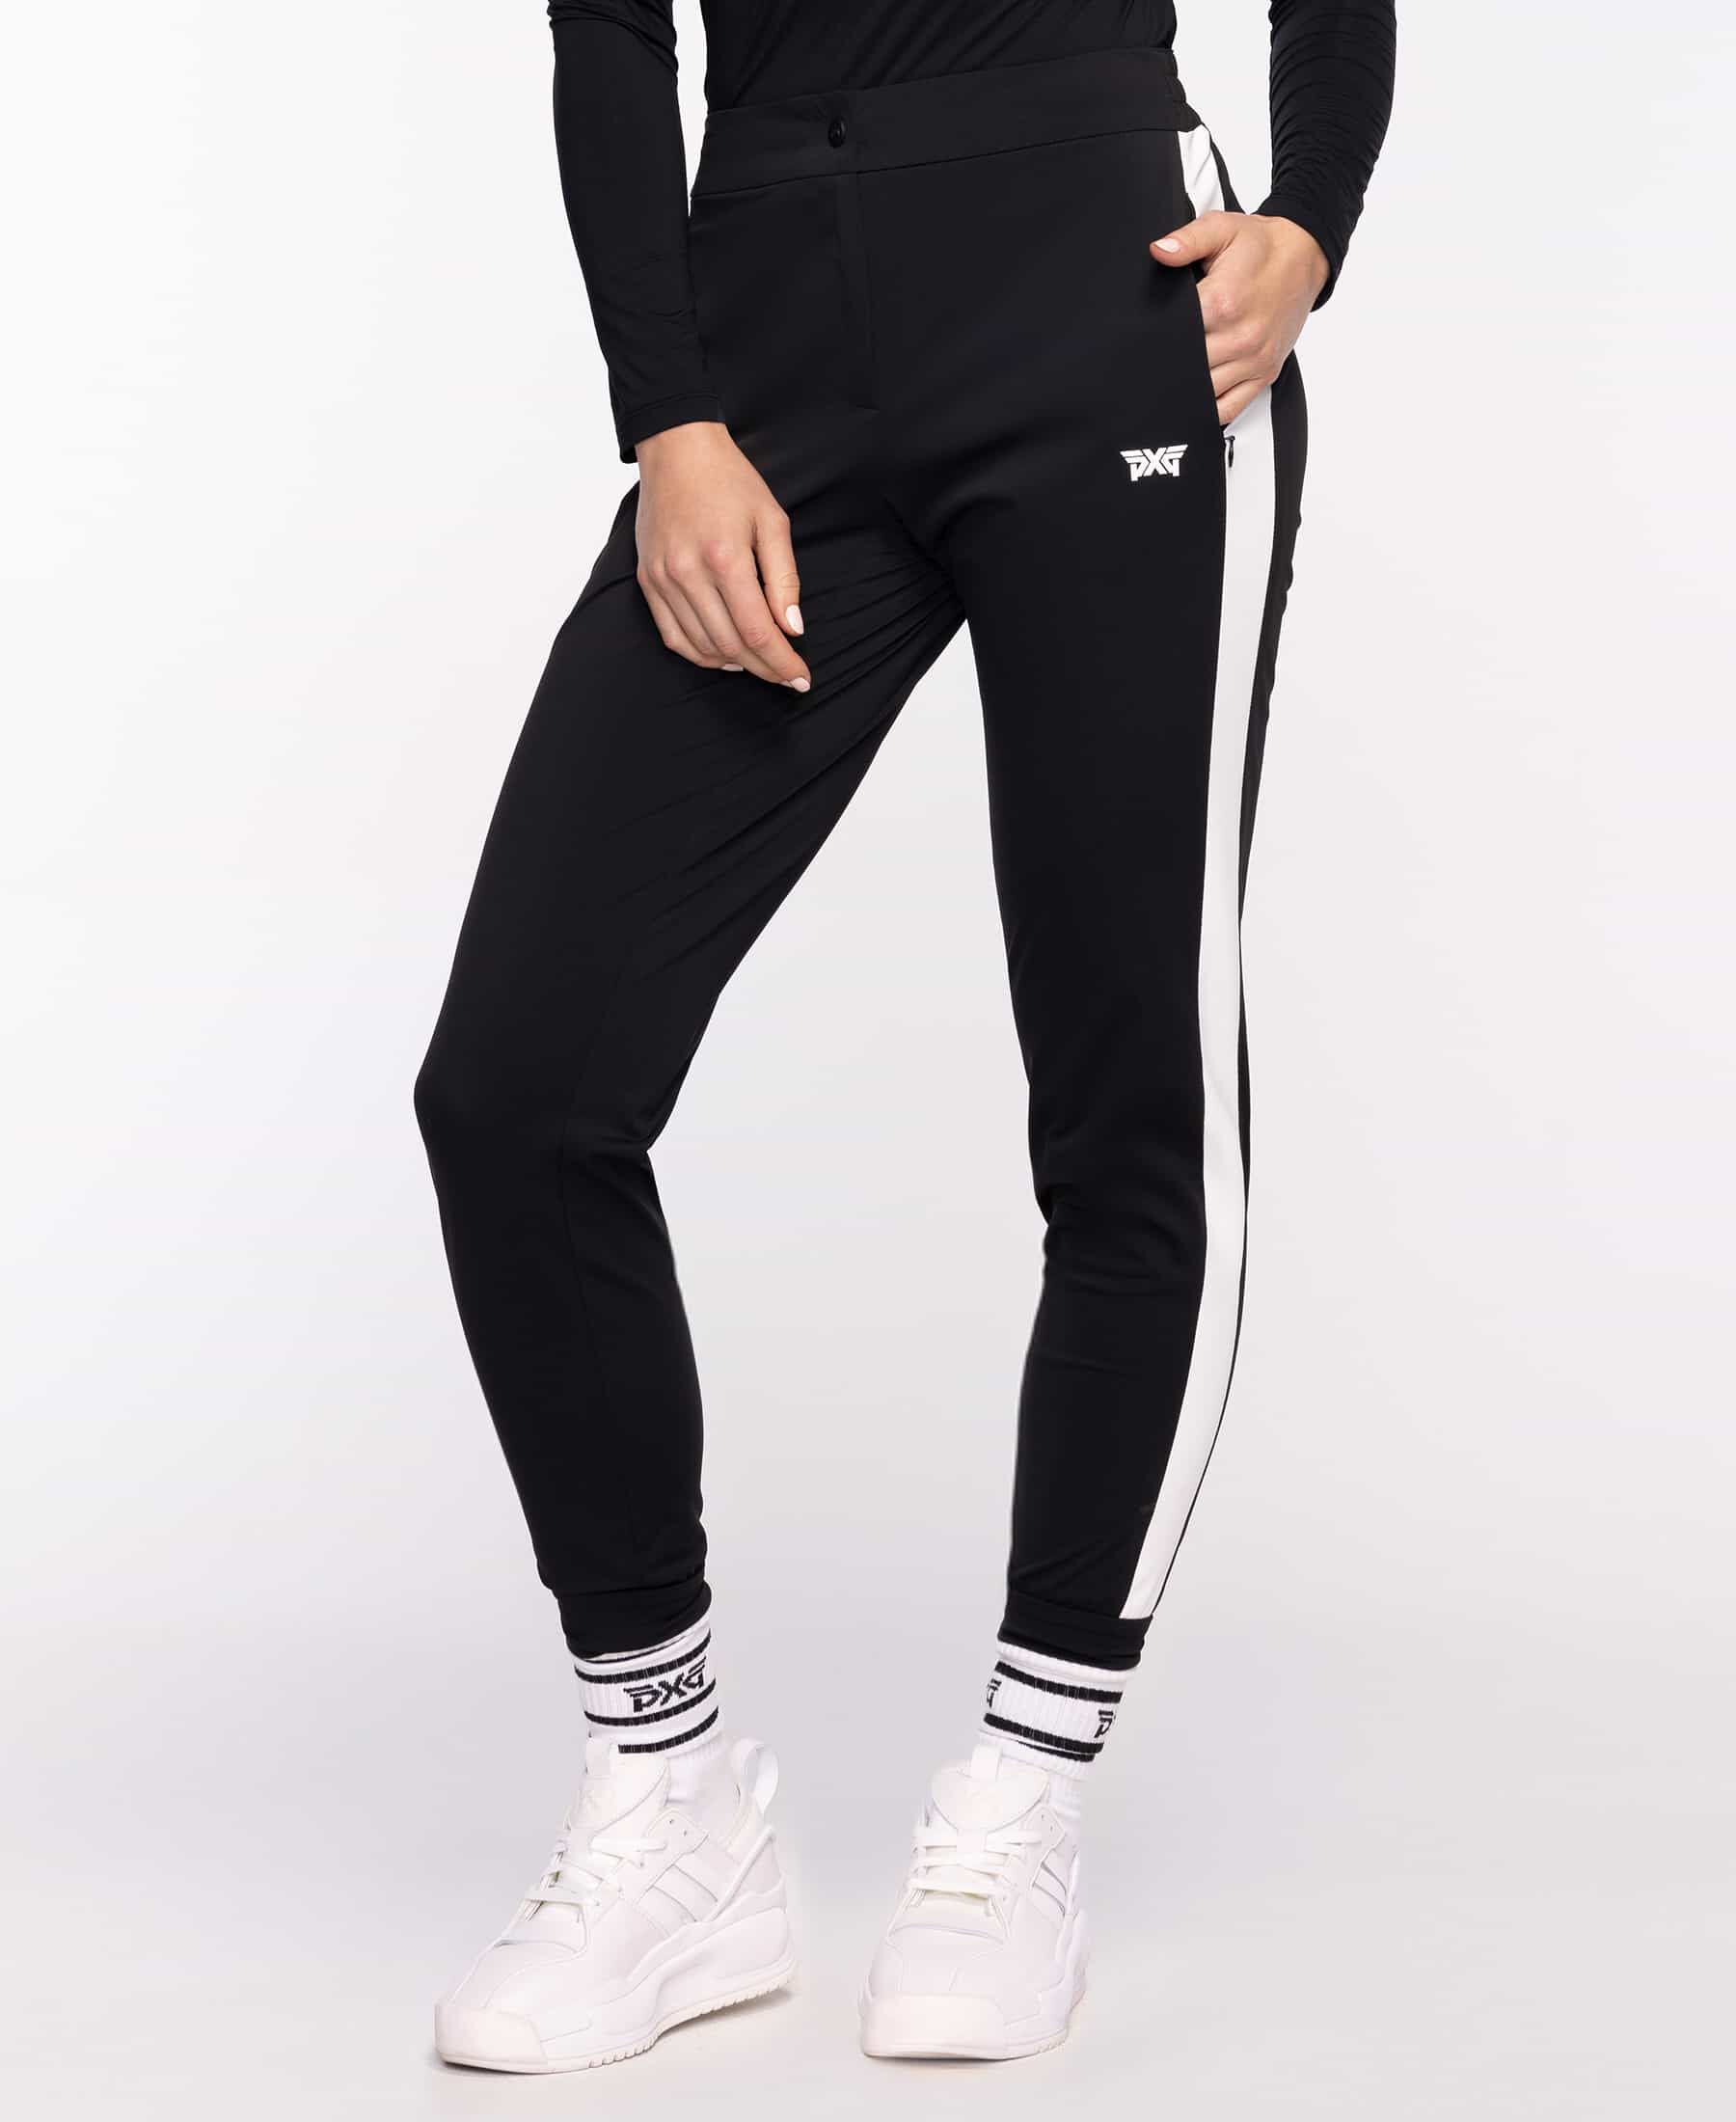 Womens High Waist Side Stripe Leggings Stretchy Fitness Sports Gym Yoga  Trouser | eBay